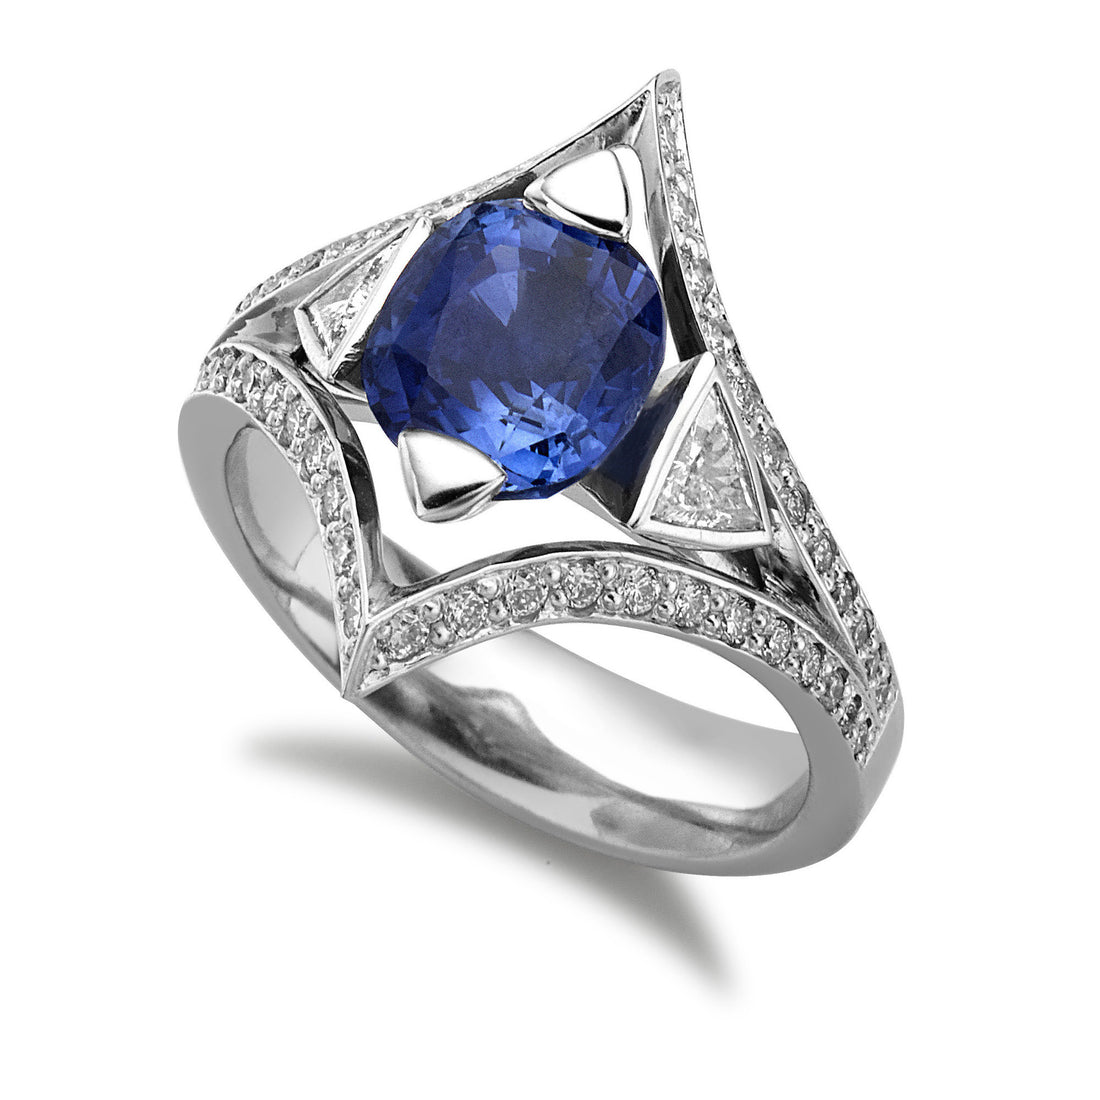 Sapphire Trillion Ring